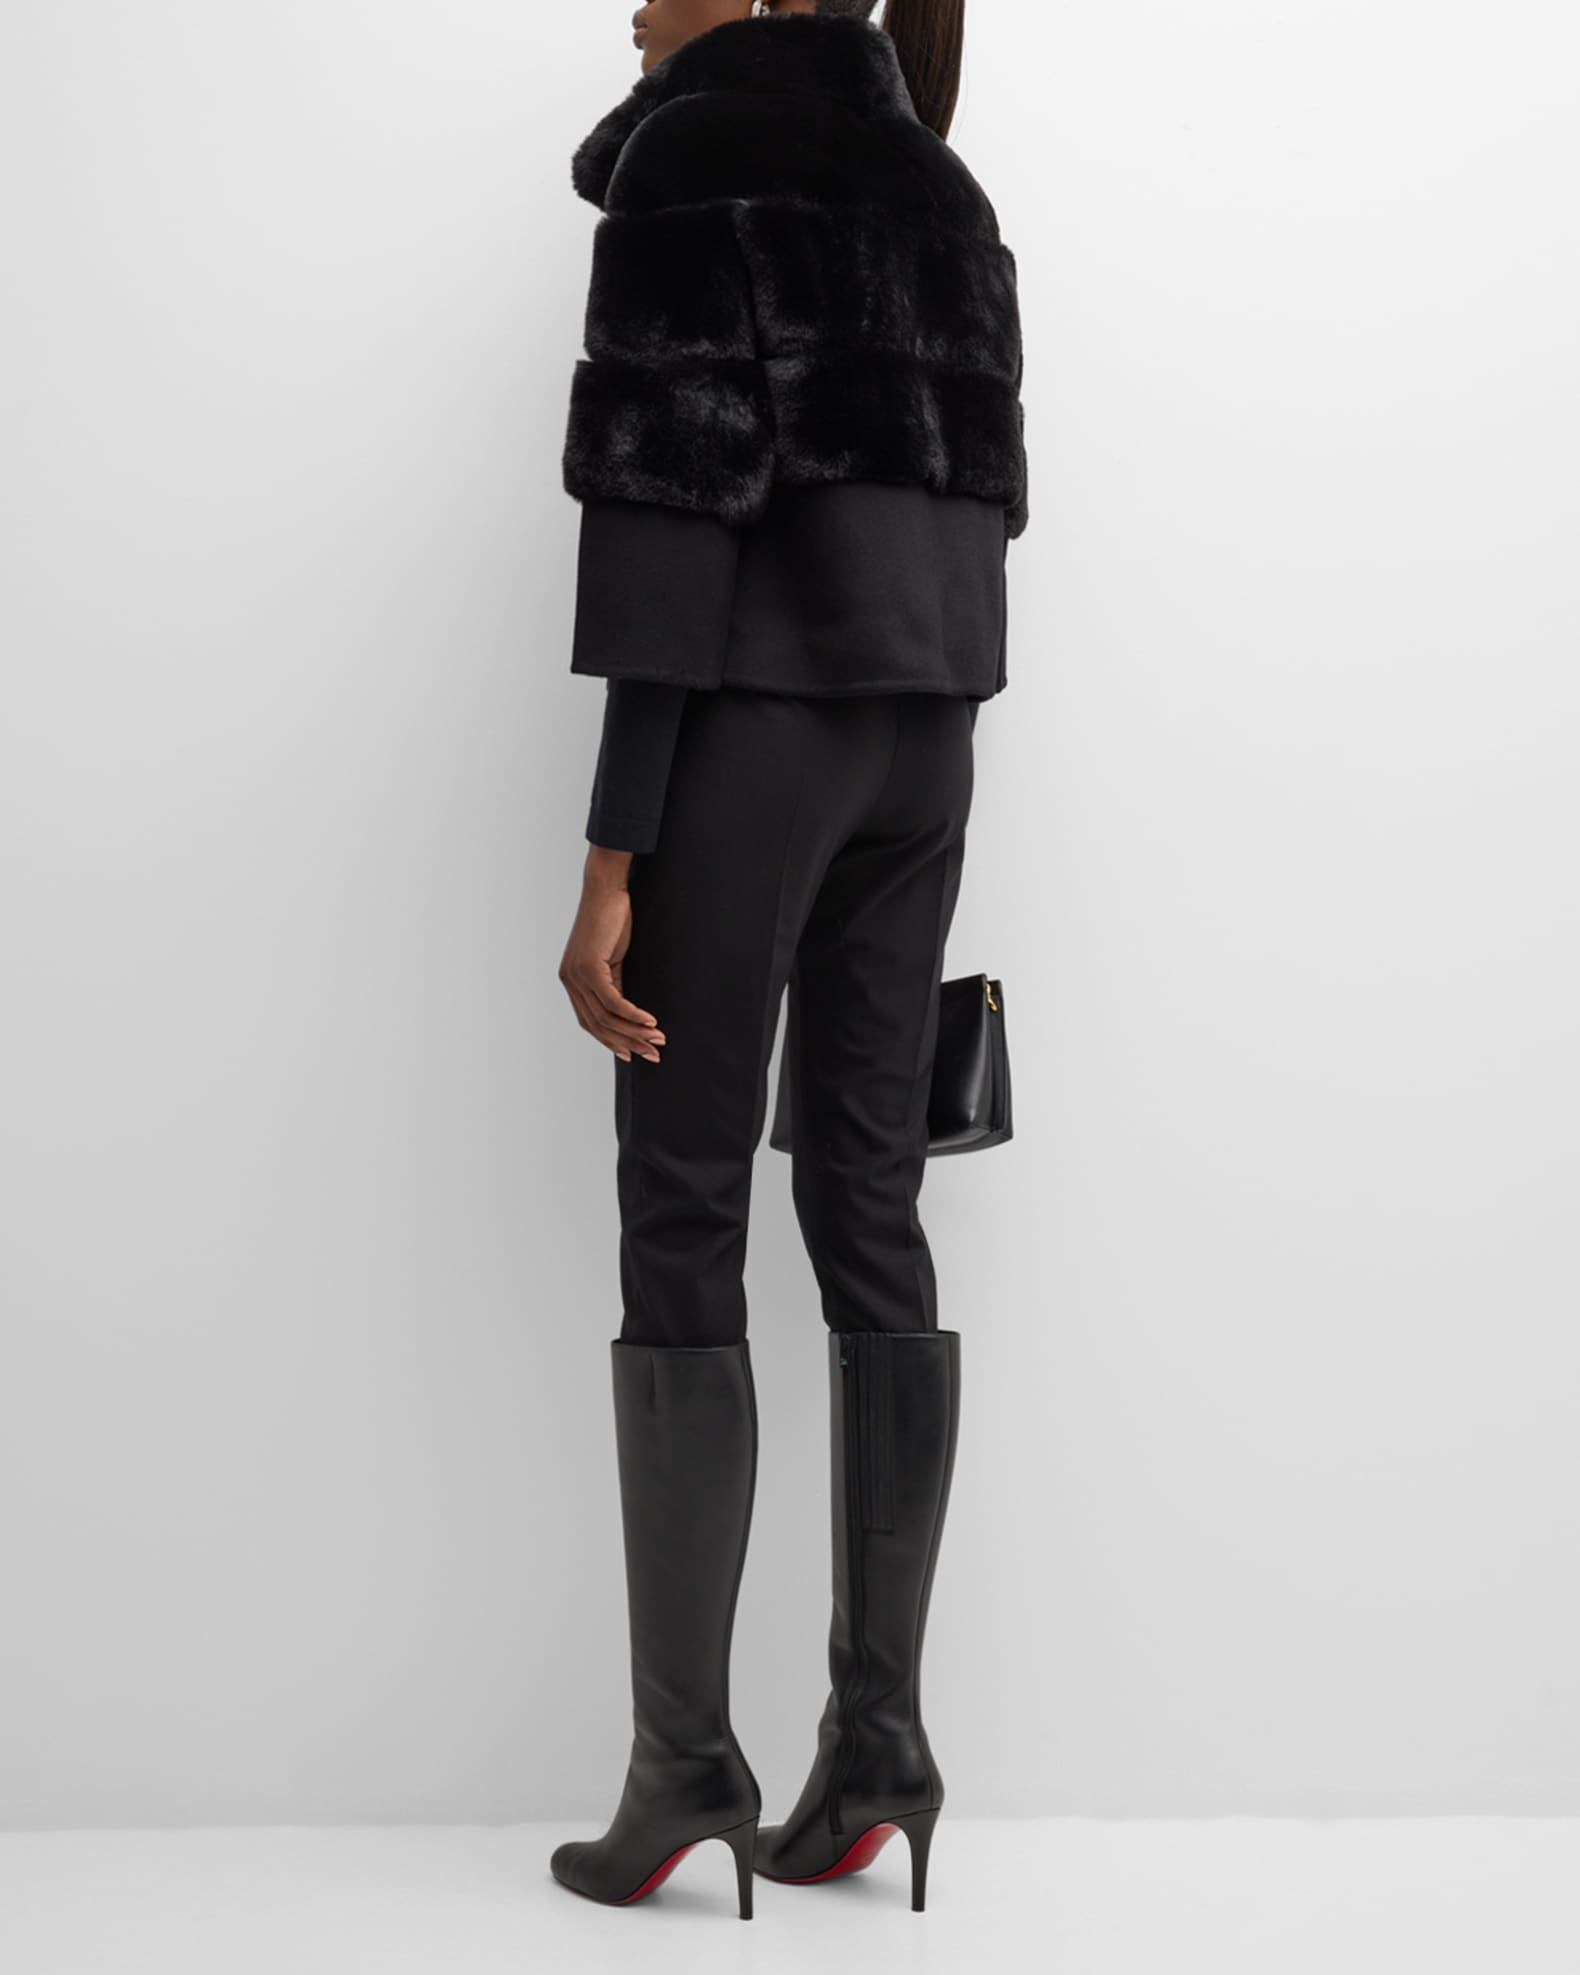 Kelli Kouri Sheard Faux Fur & Cashmere Jacket | Neiman Marcus